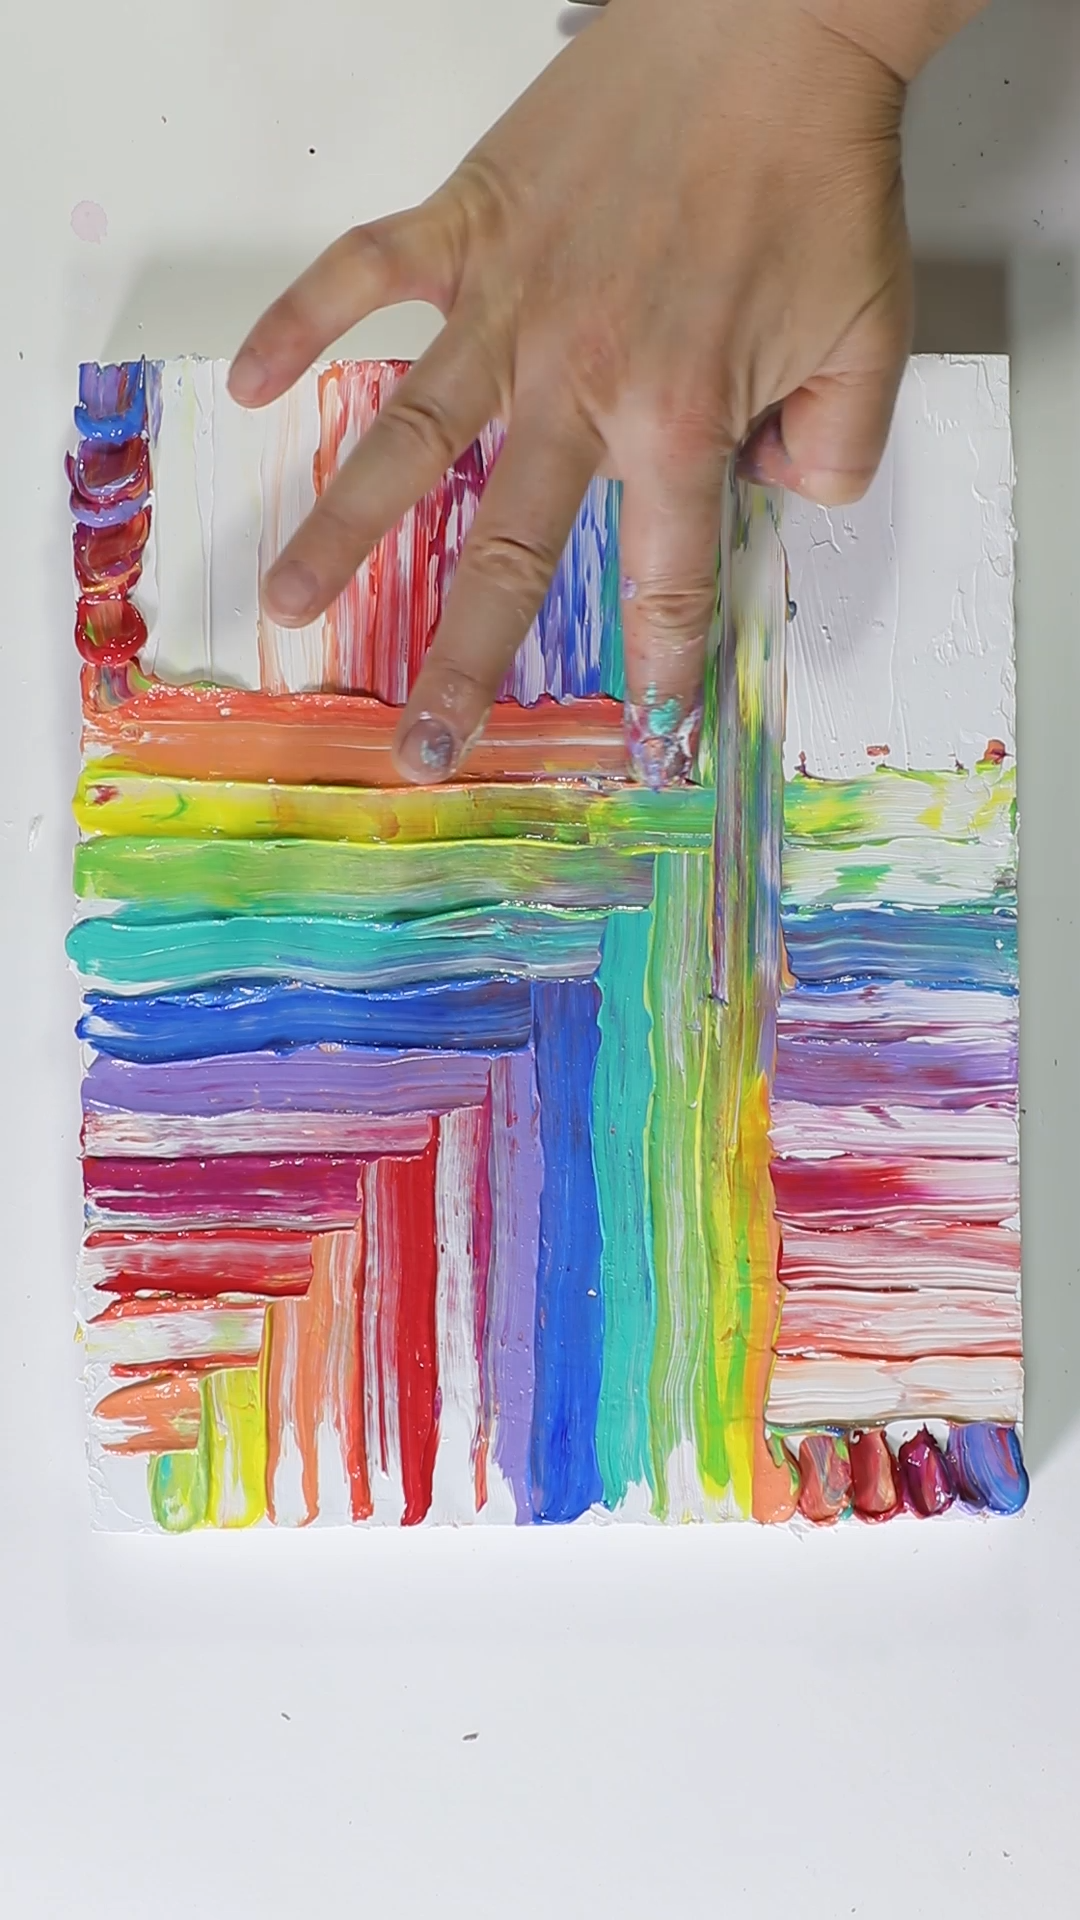 Mesmerizing Acrylic Finger Painting by Josie Lewis - Mesmerizing Acrylic Finger Painting by Josie Lewis -   19 diy Art videos ideas